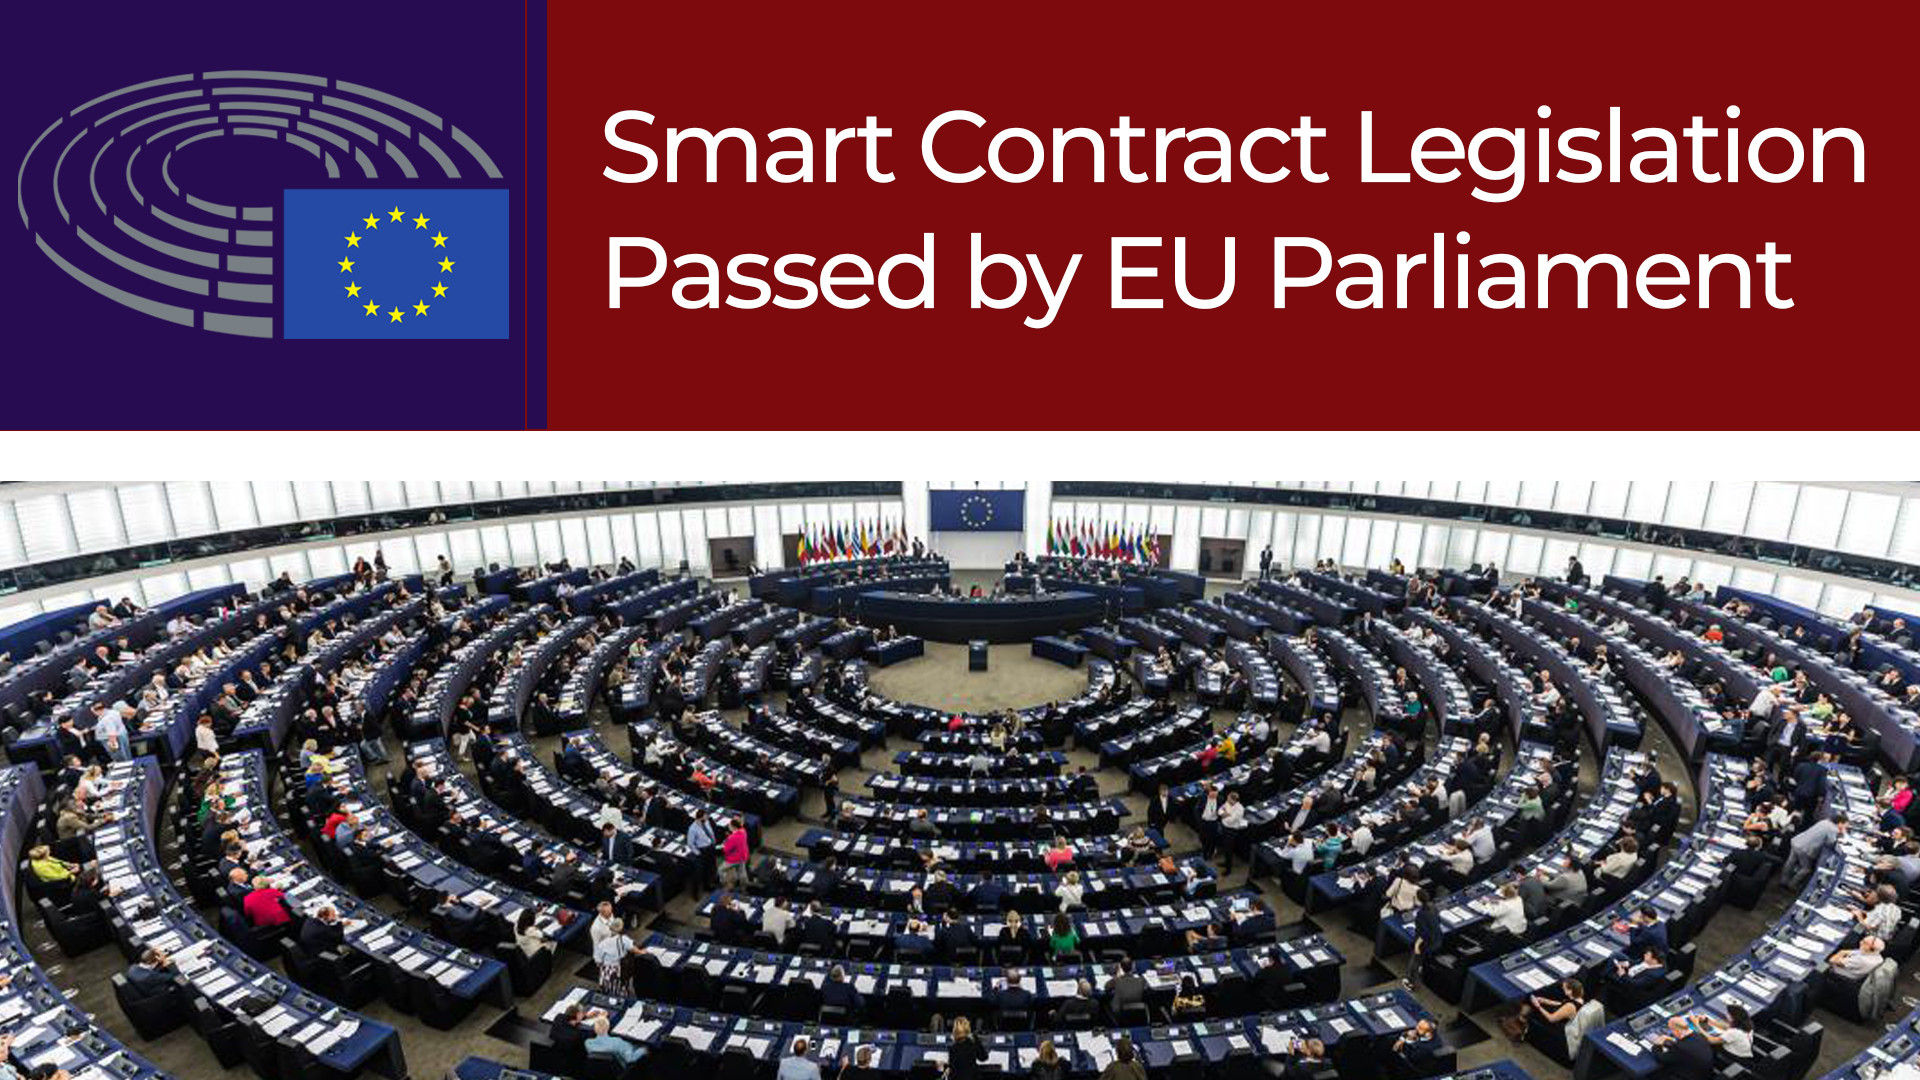 EU Parliament Passes Smart Contract Legislation Under the Data Act